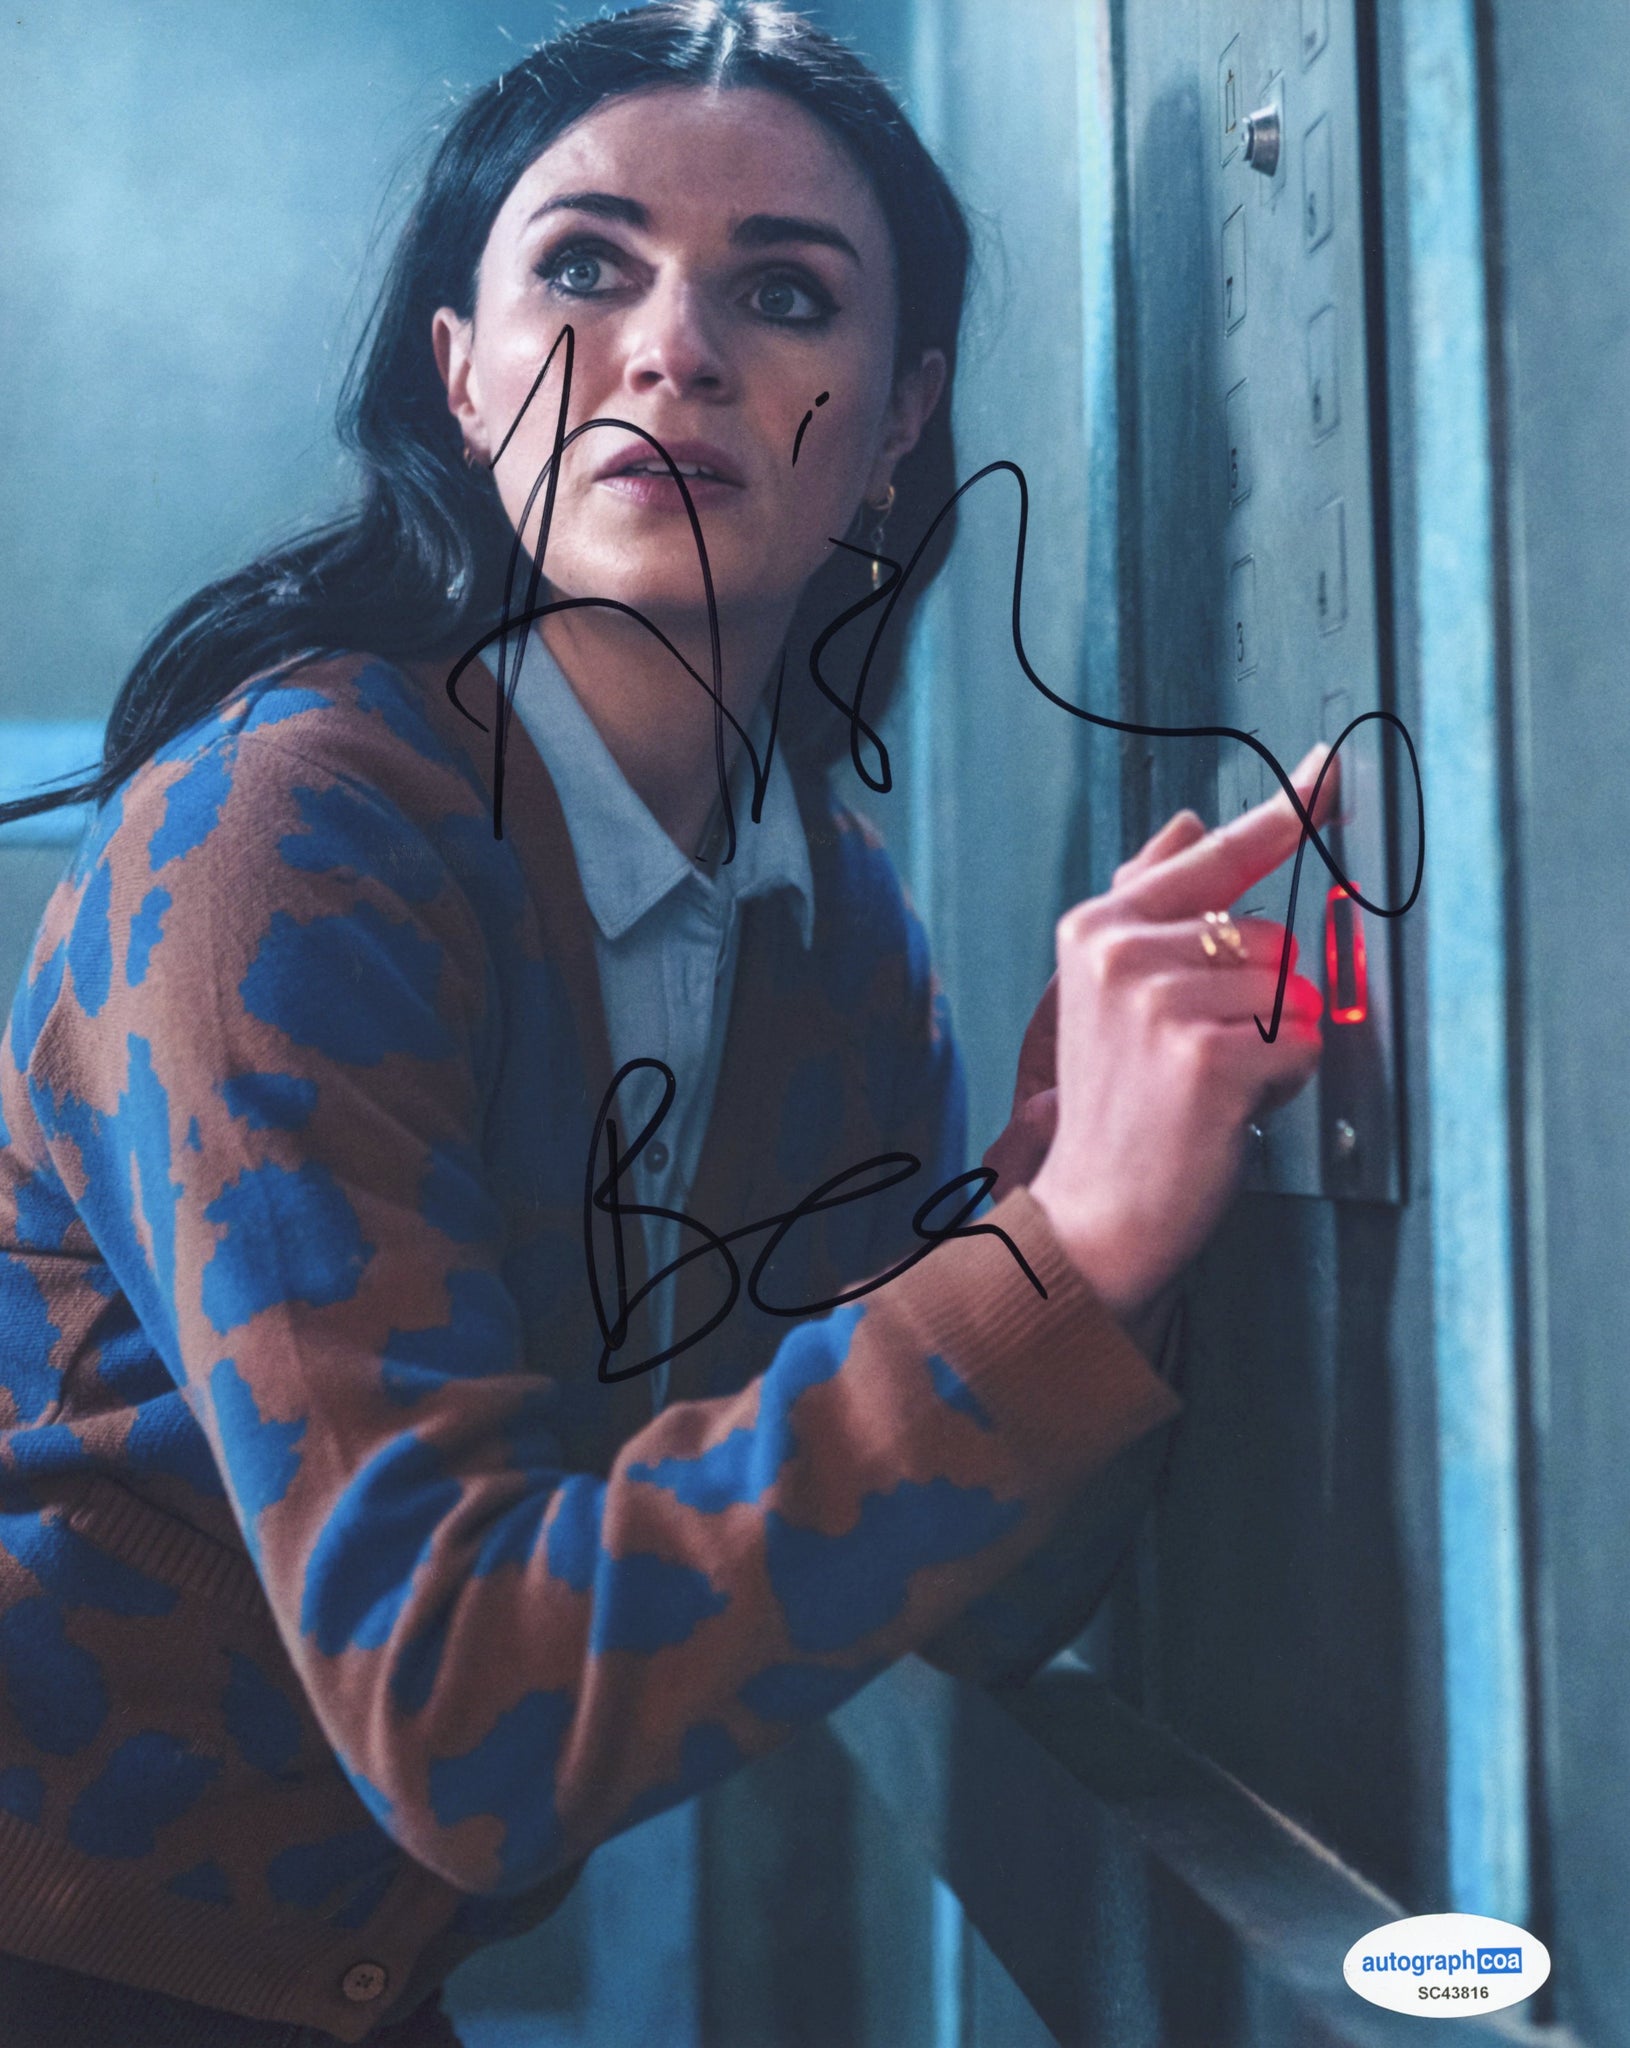 Aisling Bea Doctor Who Signed Autograph 8x10 Photo ACOA